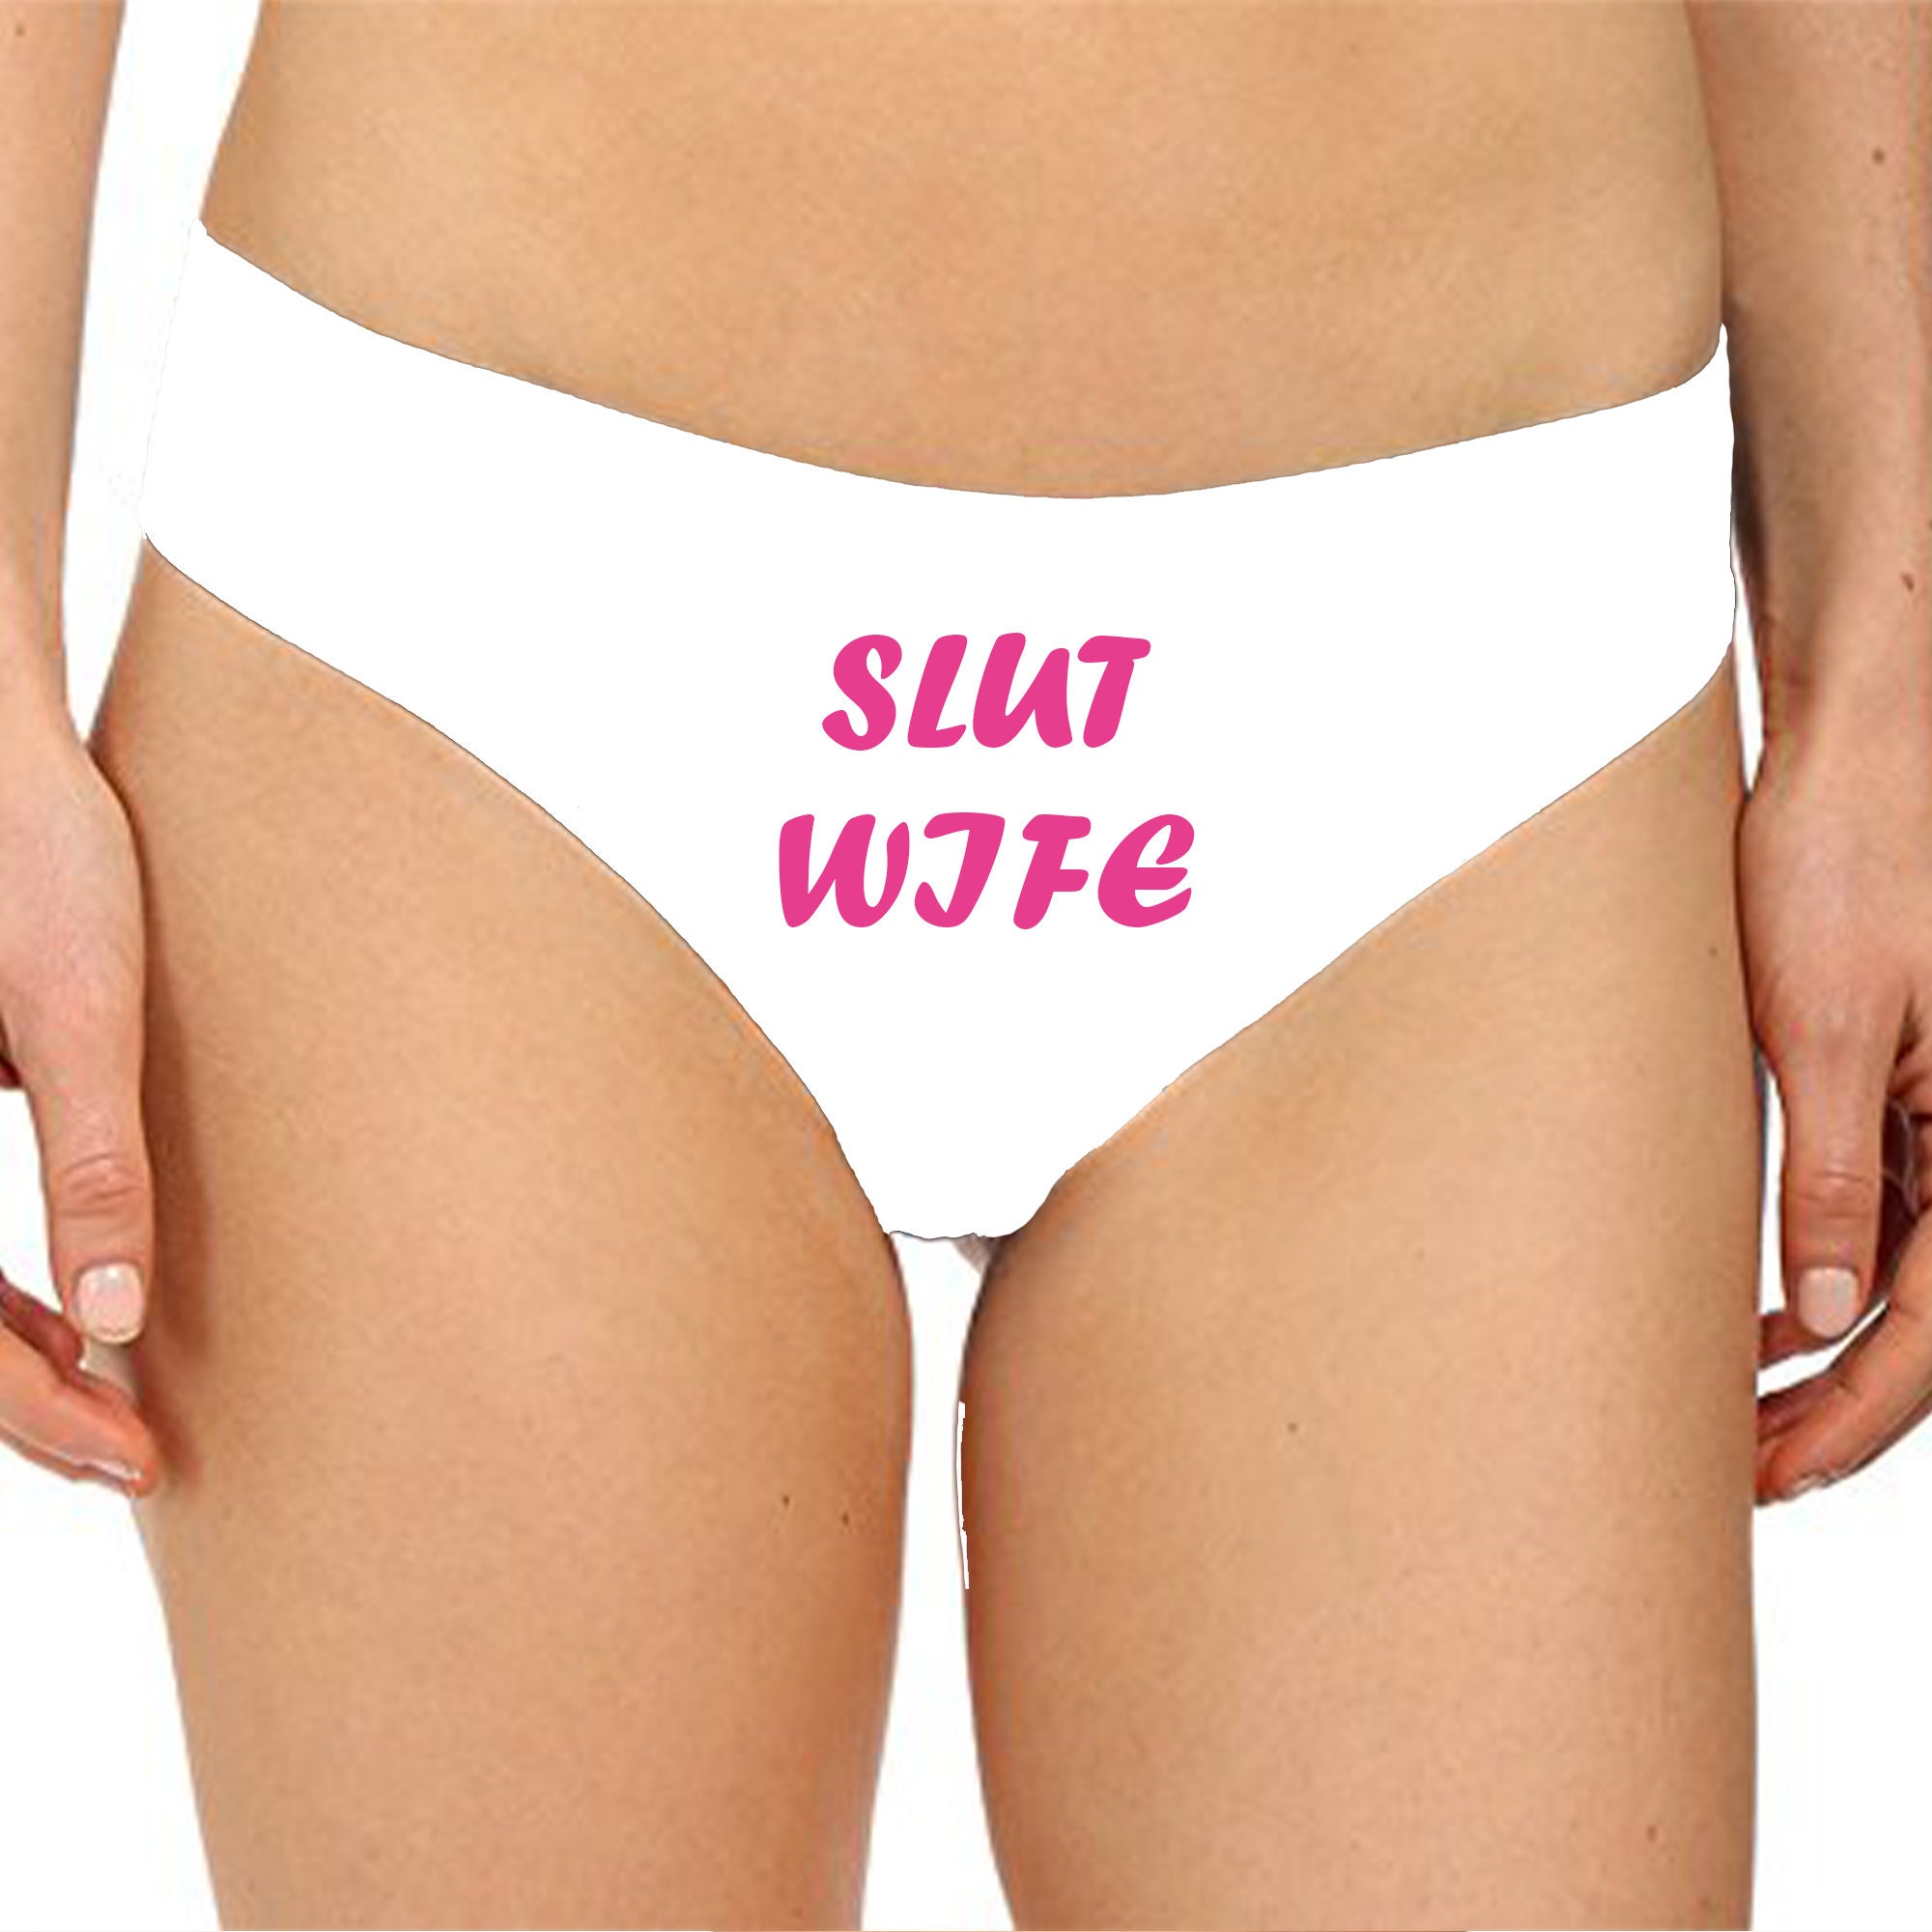 Slutwife panties